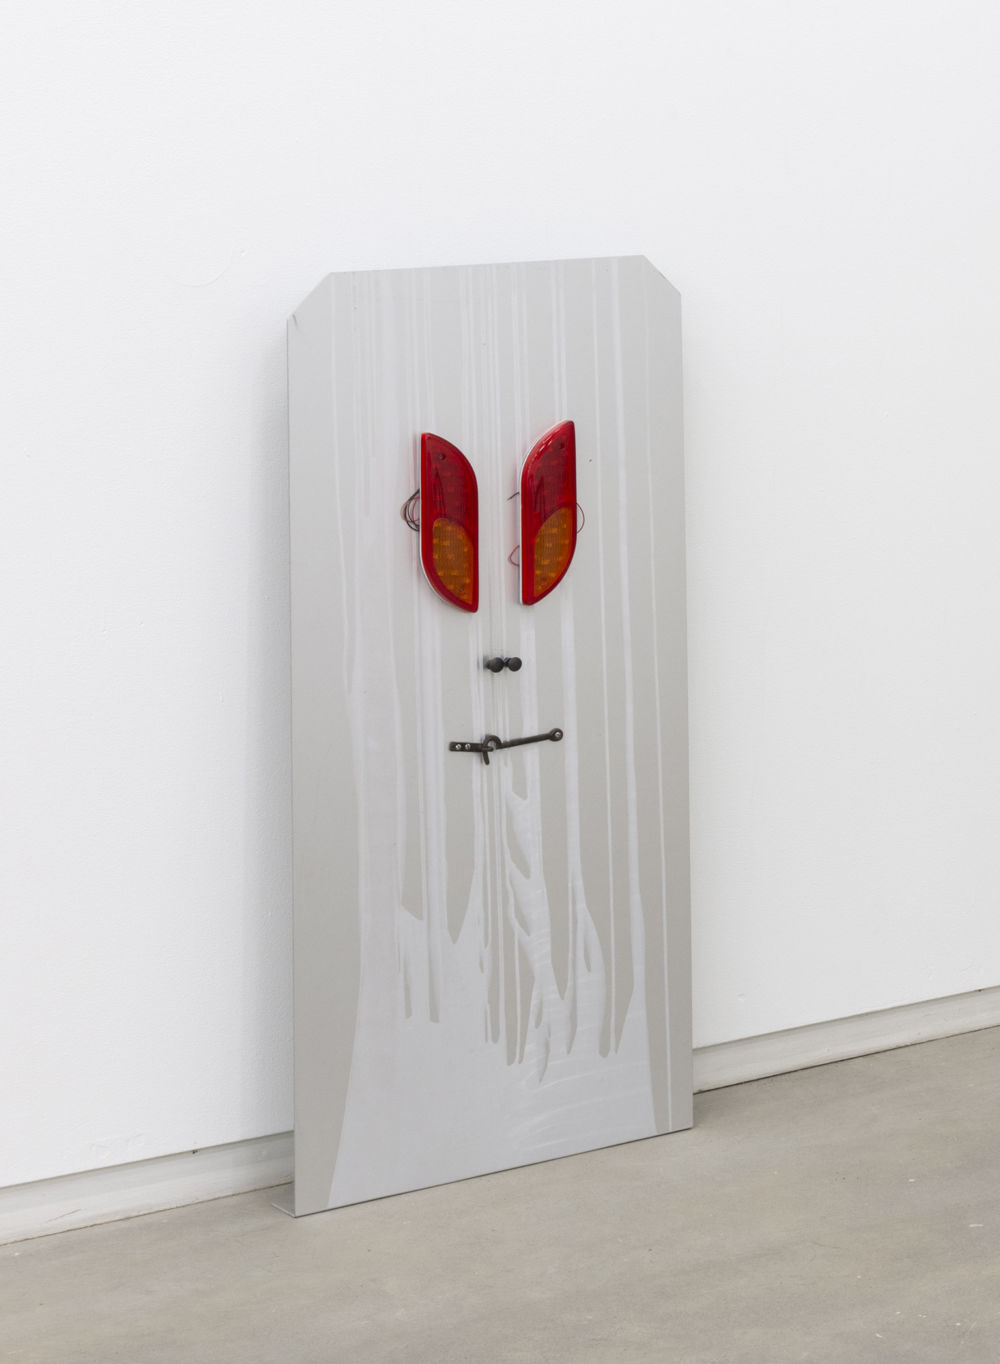 Christina Mackie, Trestle Person II, 2012, aluminum, plastic, steel, 37 x 17 x 5 in. (94 x 43 x 11 cm) by 